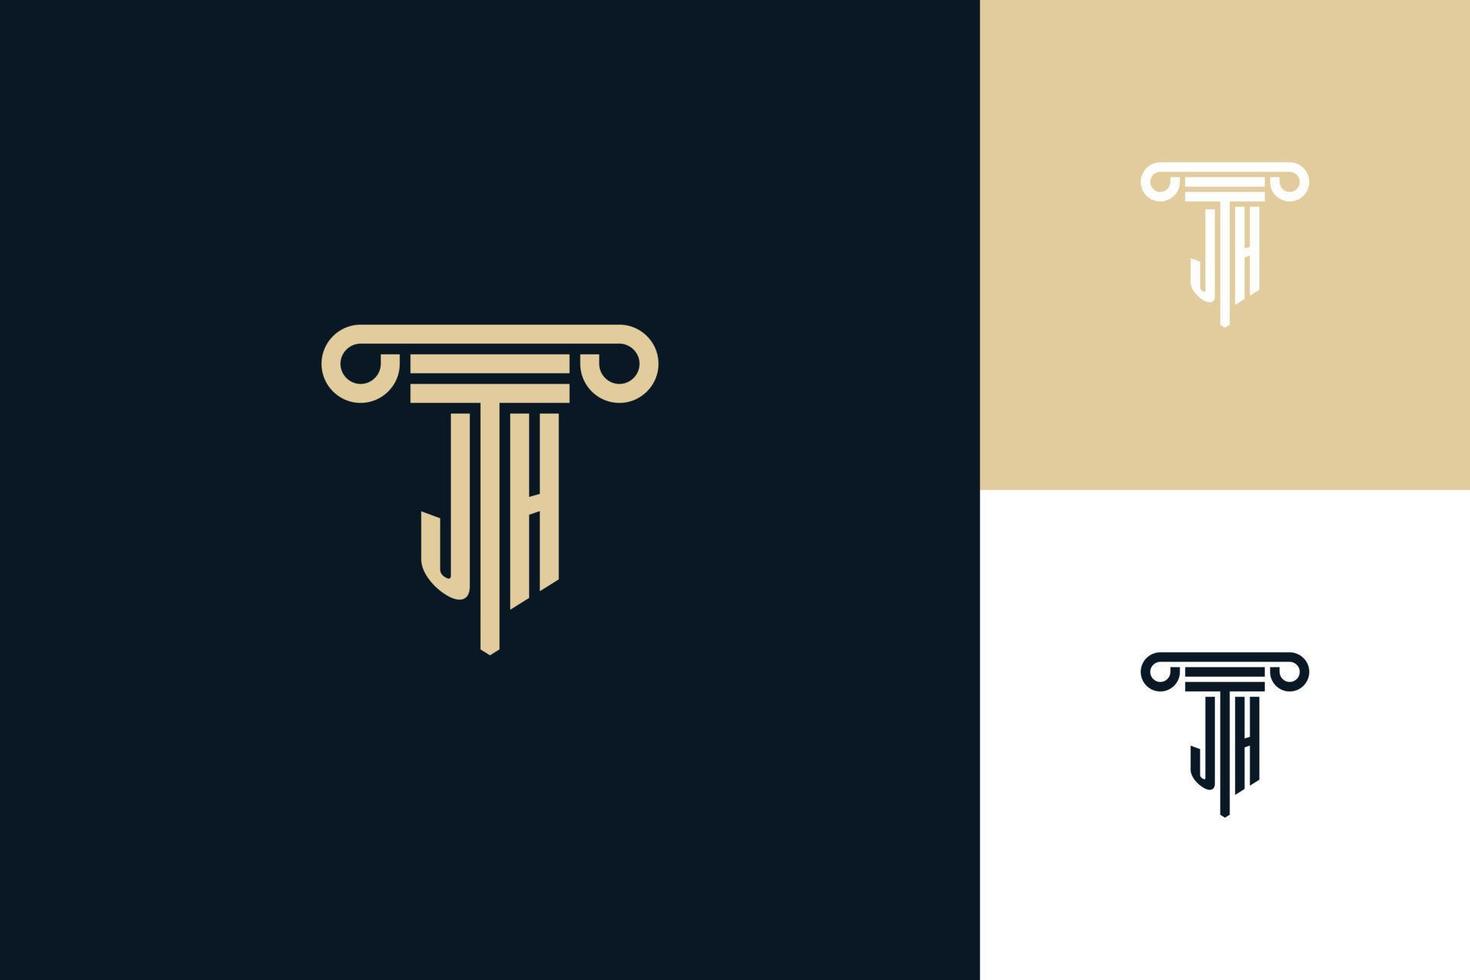 jh monogram initialer design logotyp. advokatlogotypdesignidéer vektor